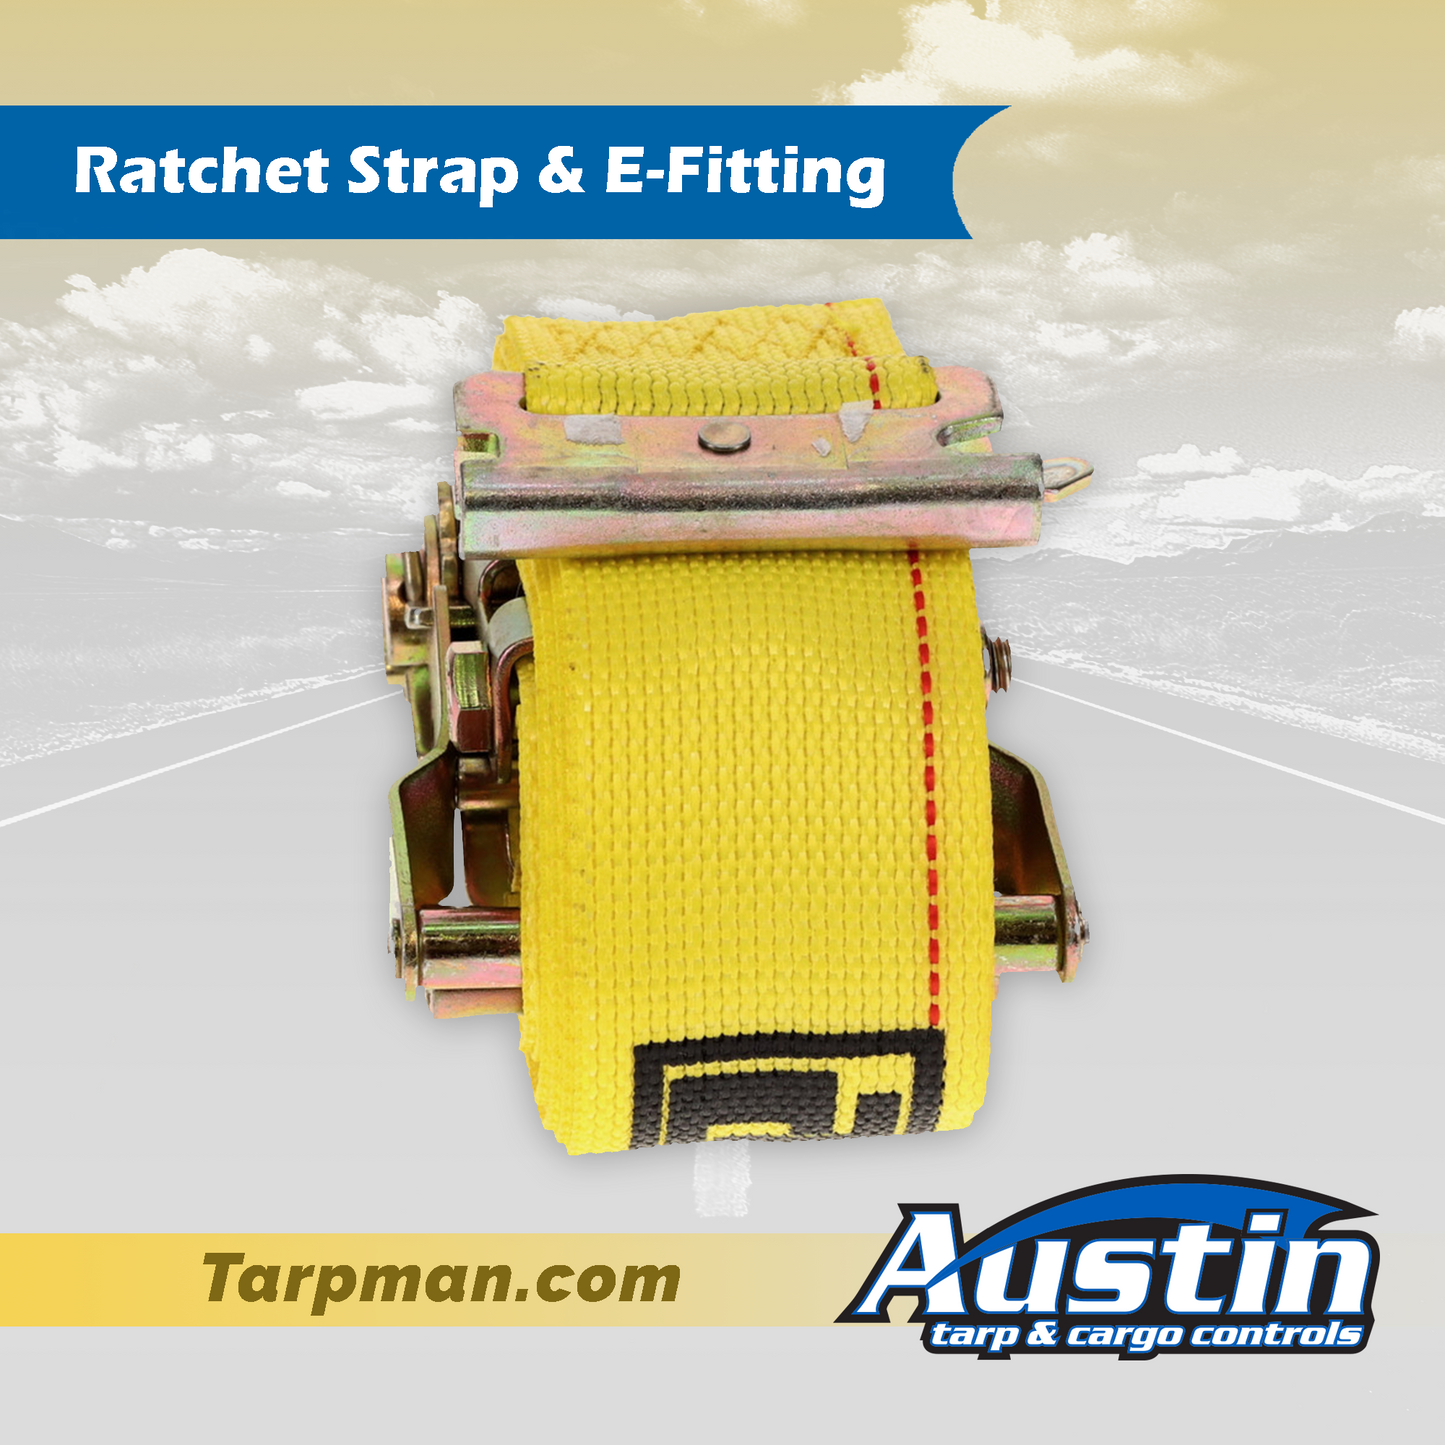 2" X 16' Ratchet Strap & E-Fitting Tarpman.com | Austin Tarp & Cargo Controls